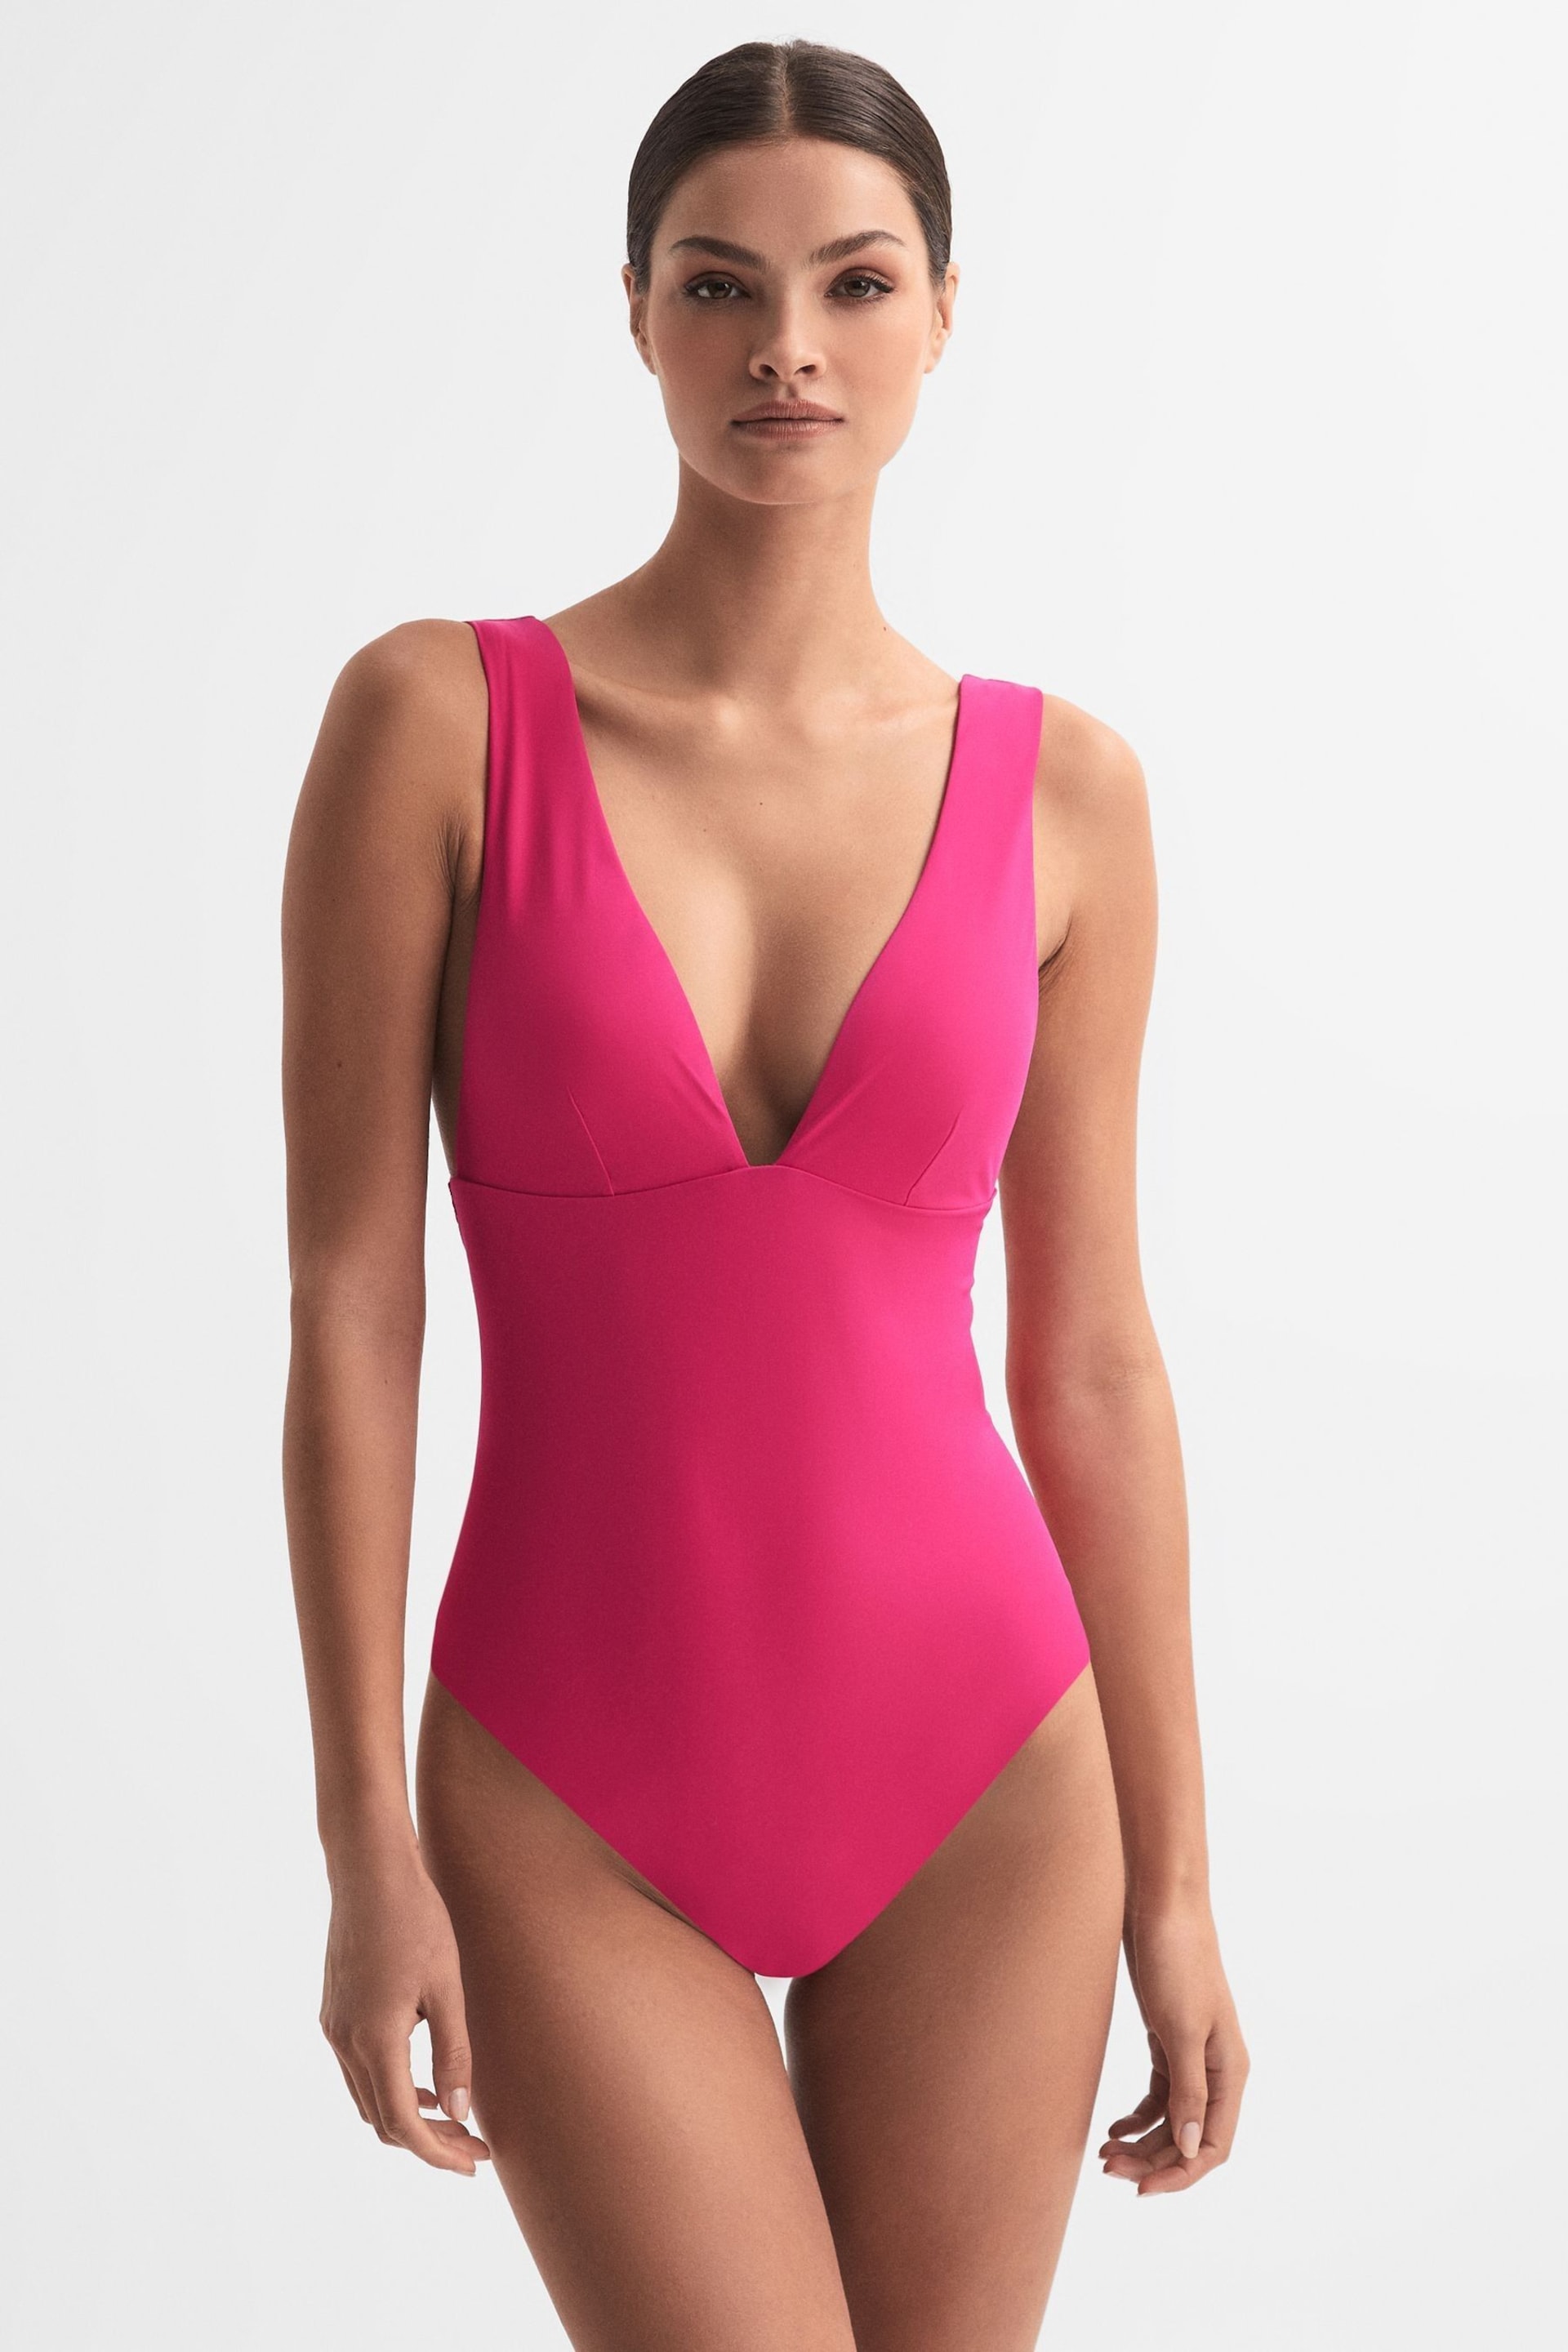 Reiss Pink Luna Italian Fabric Swimsuit - Image 1 of 5